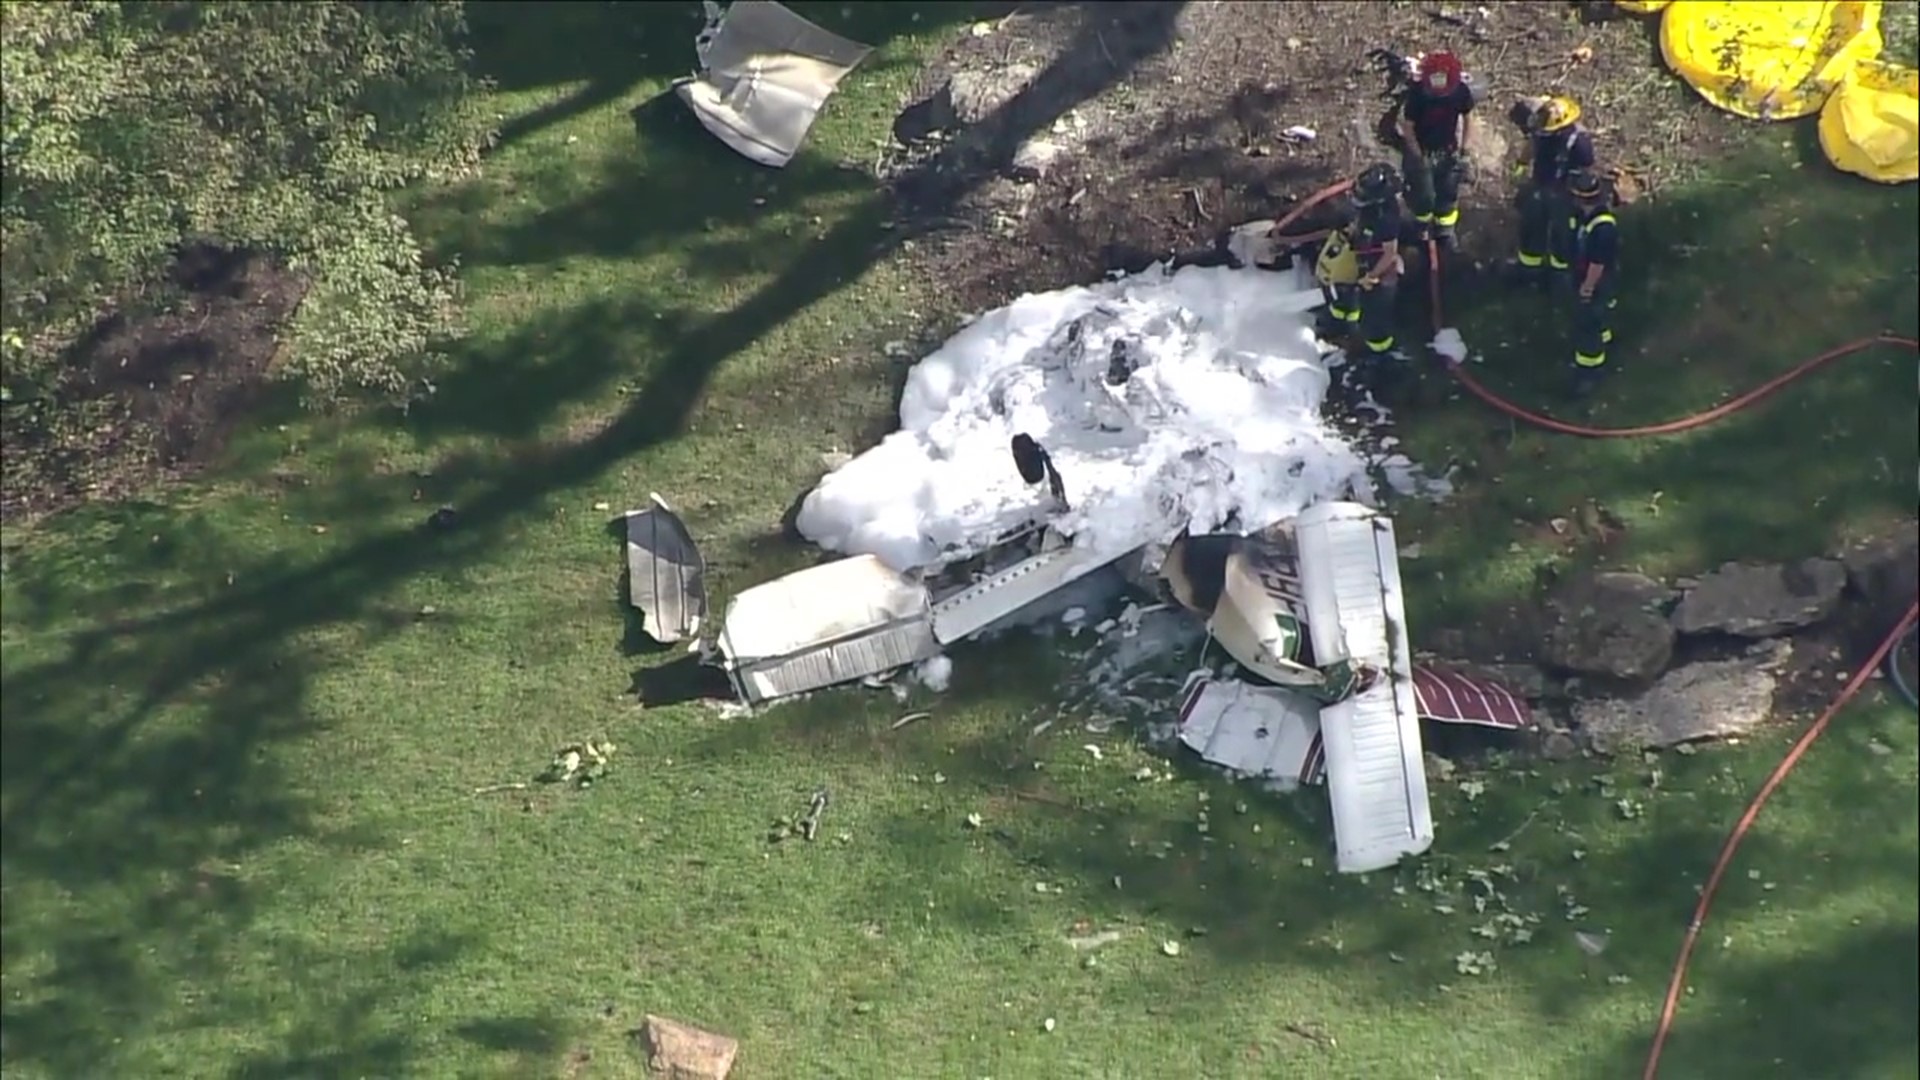 The crash was reported around 1:30 p.m. Wednesday near Allentown.